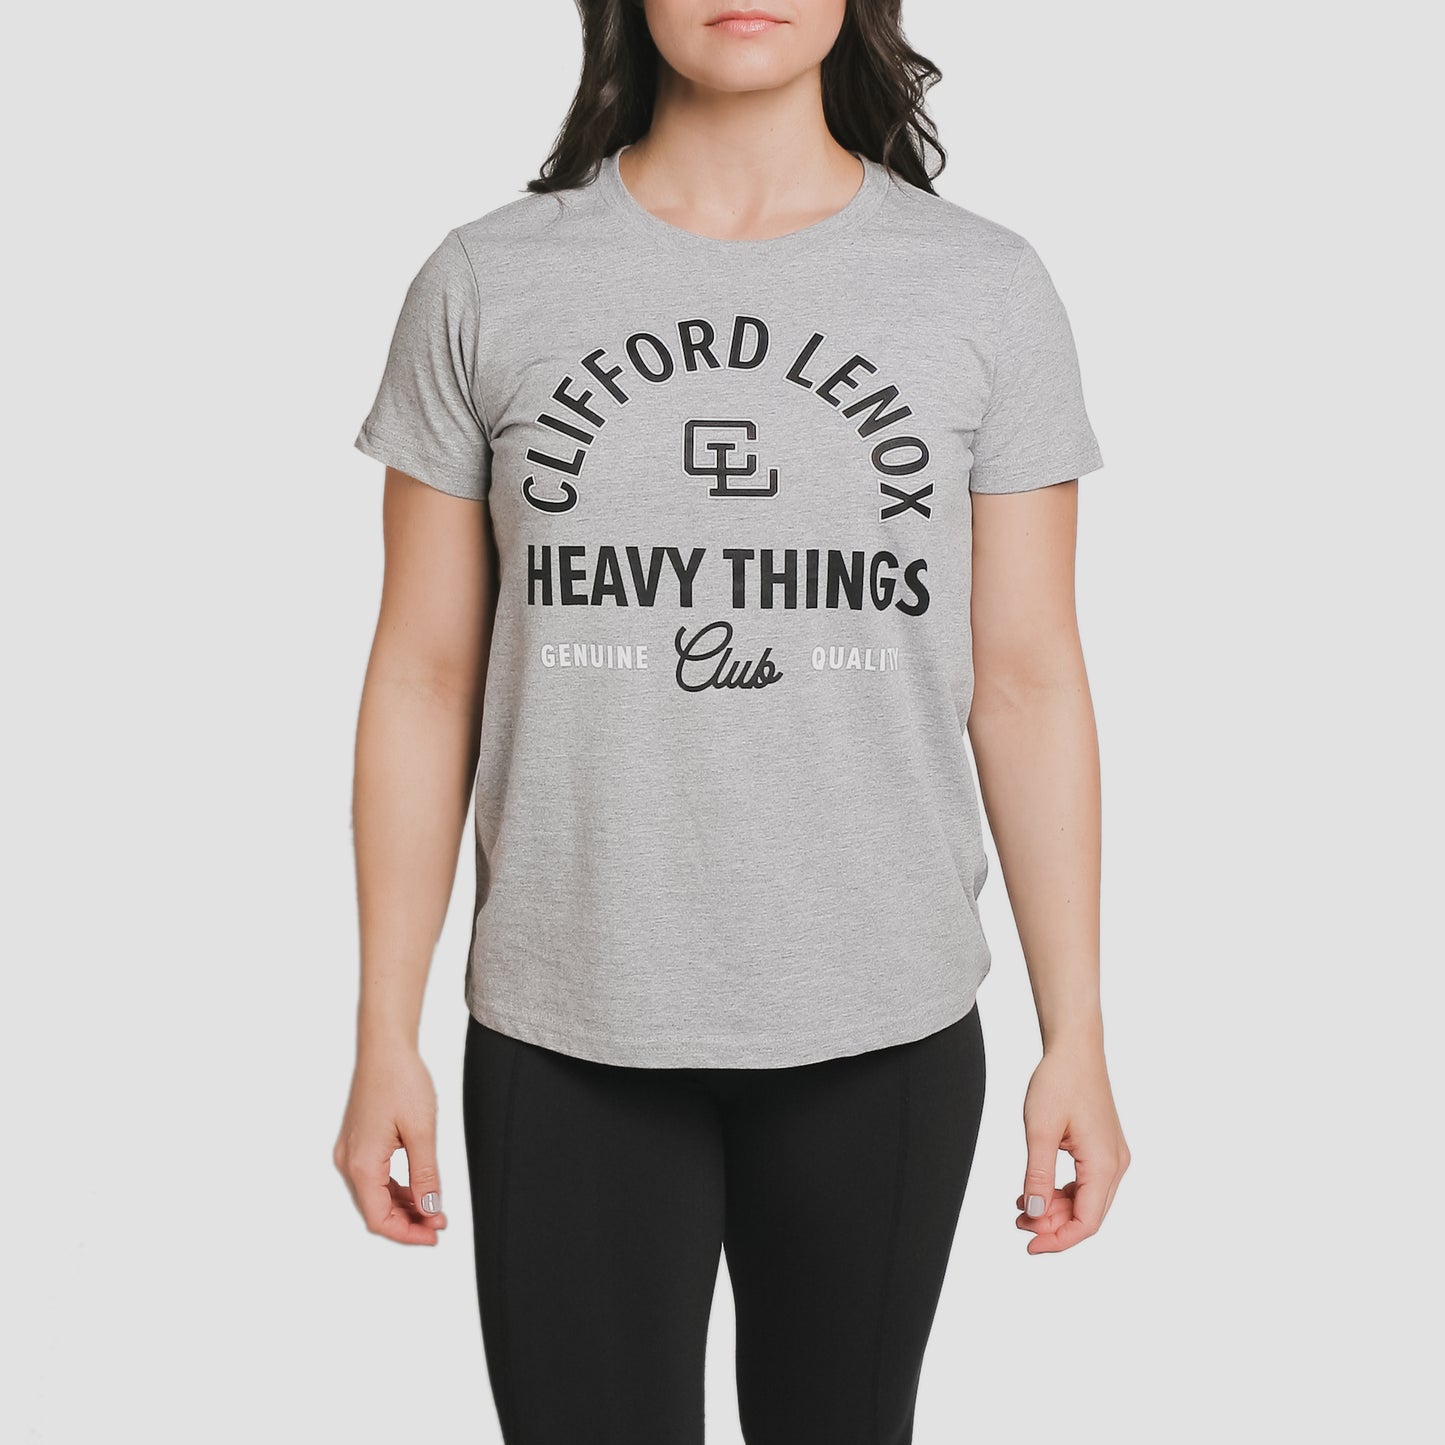 Heavy Things Club Women's Tee // Grey heather